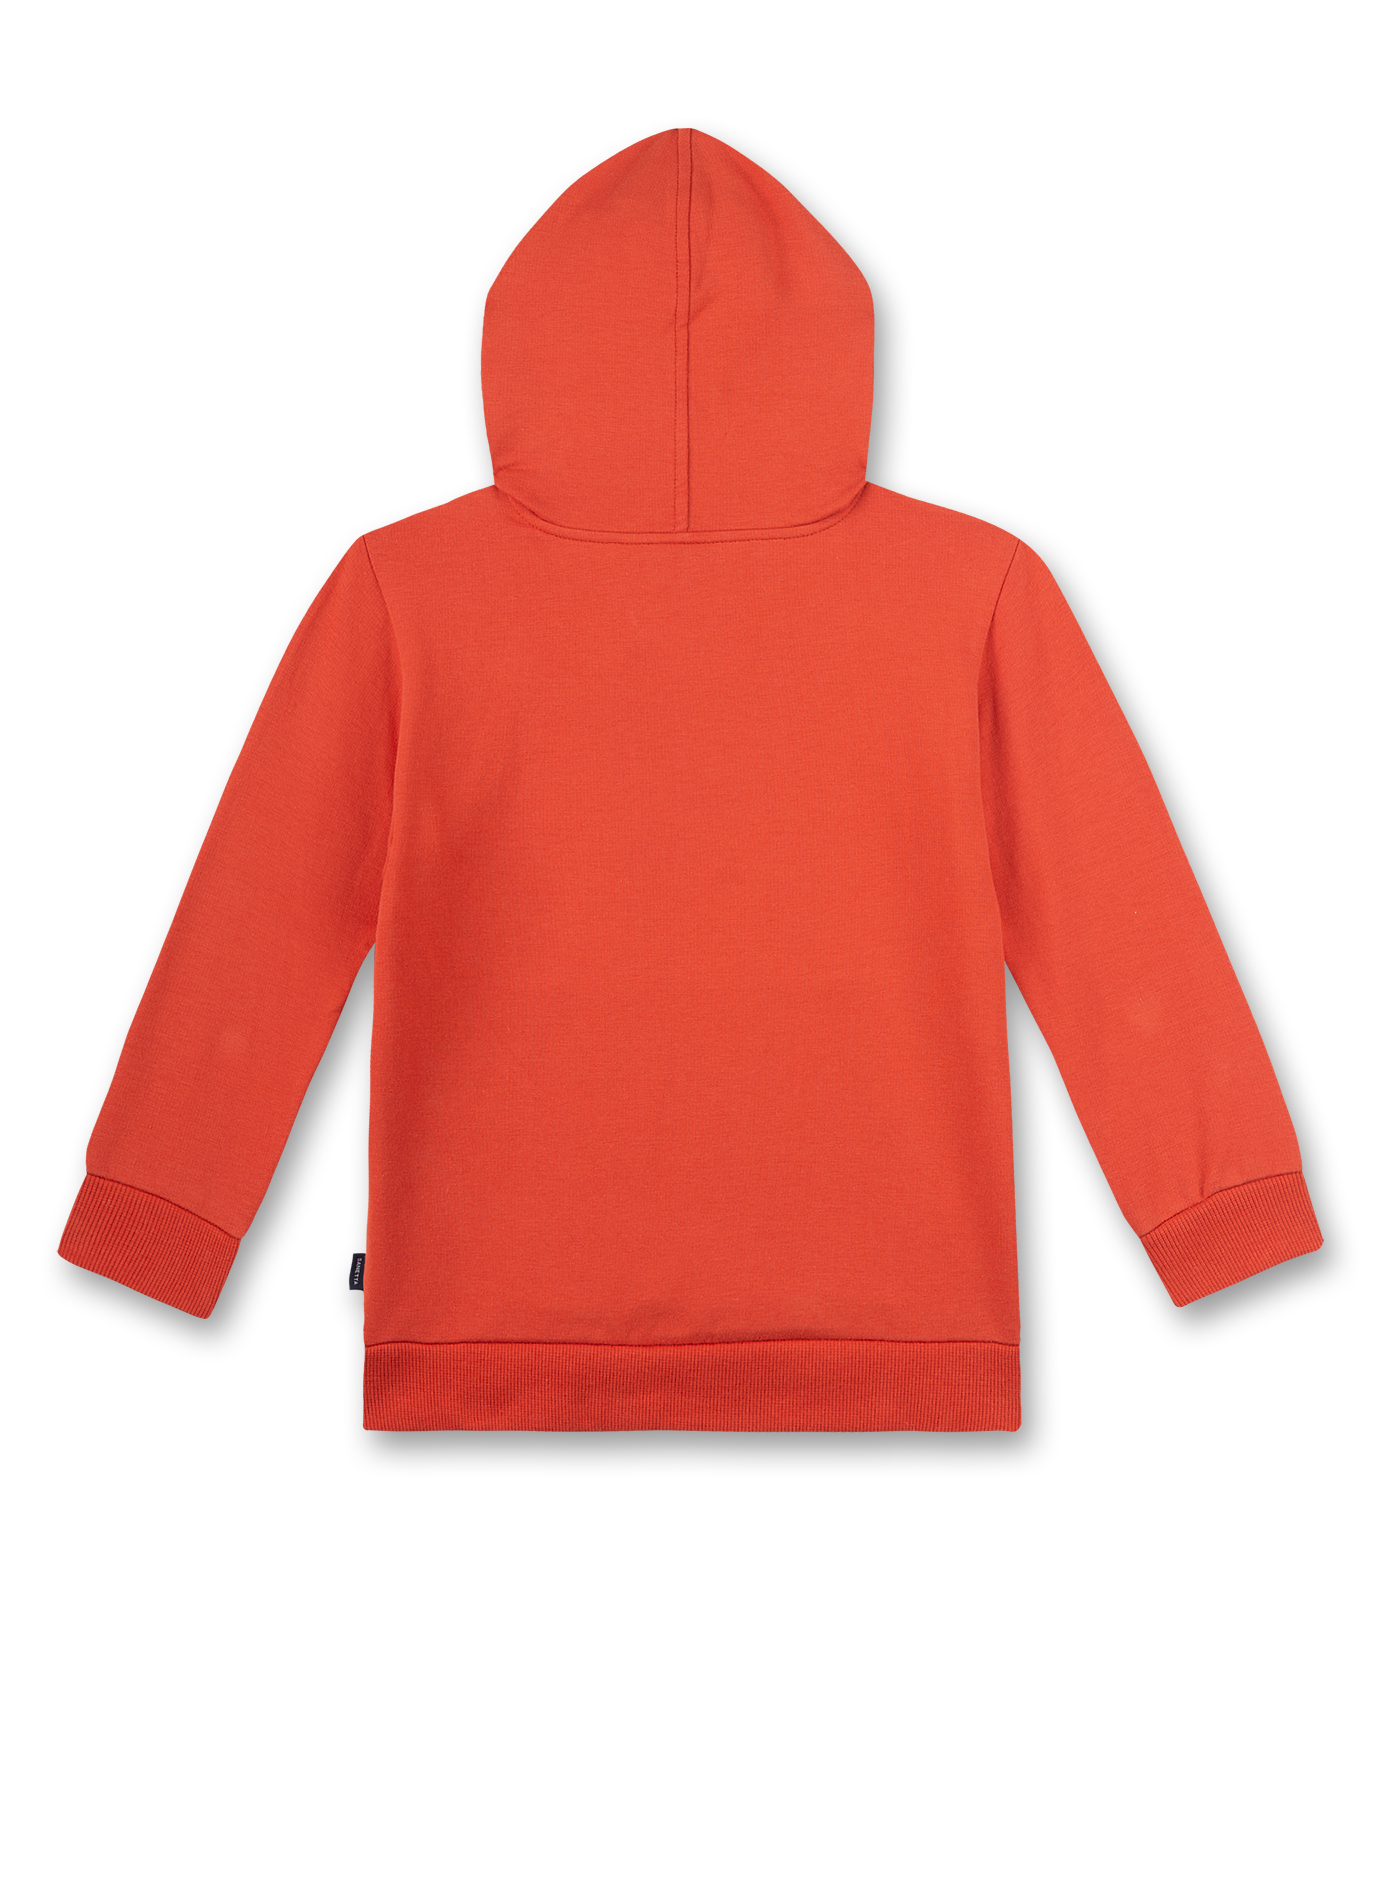 Jungen-Sweatshirt Orange Expedition